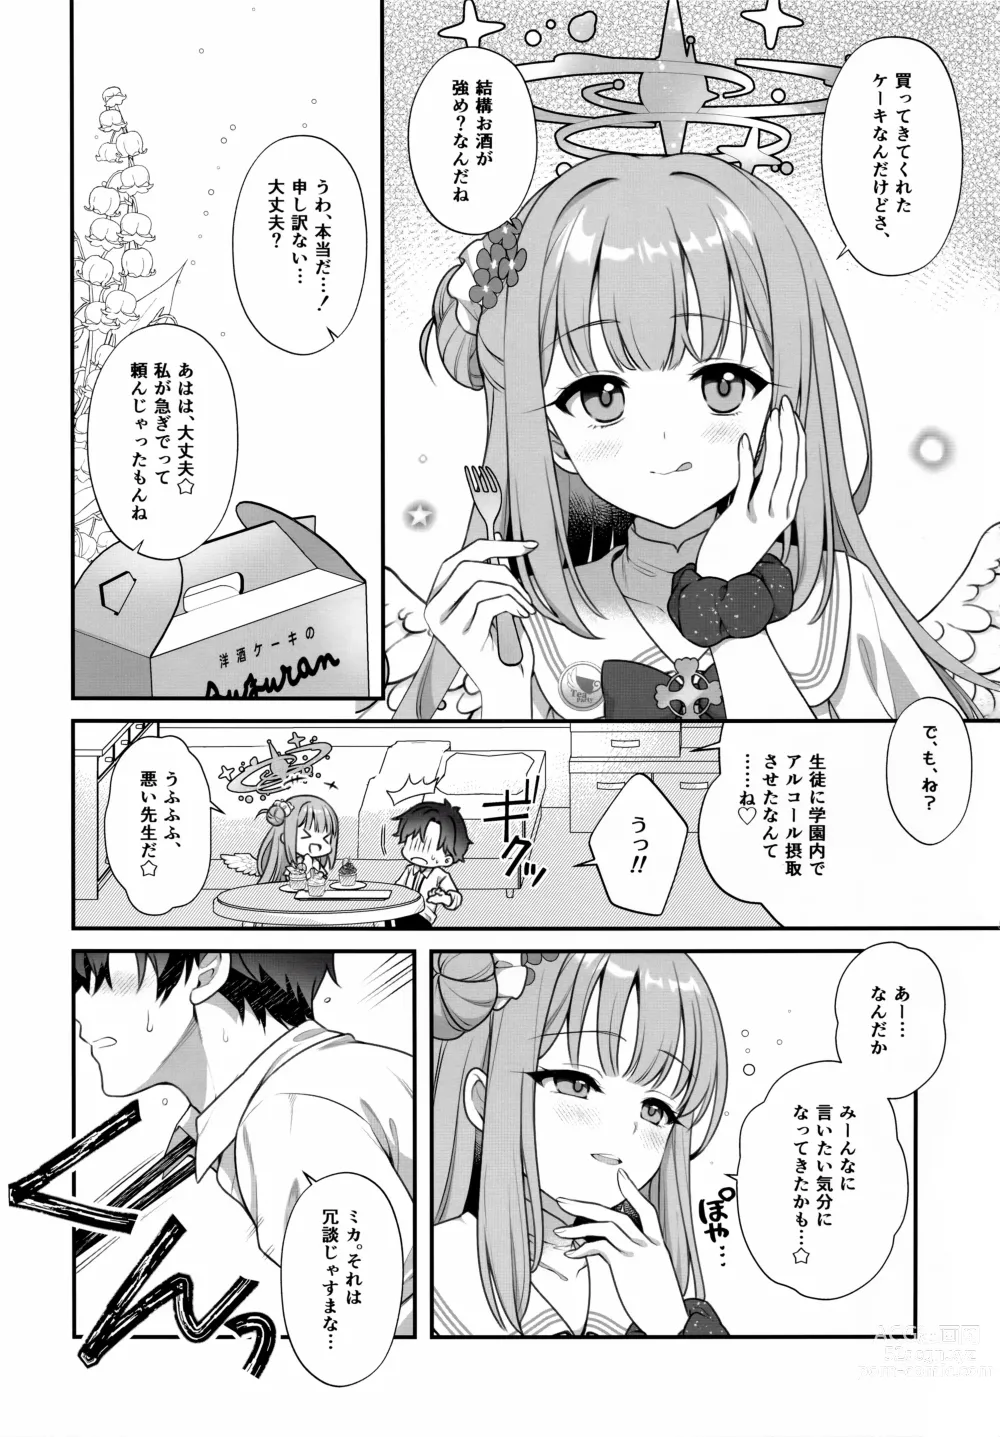 Page 4 of doujinshi Mika to Himitsu no Teatime